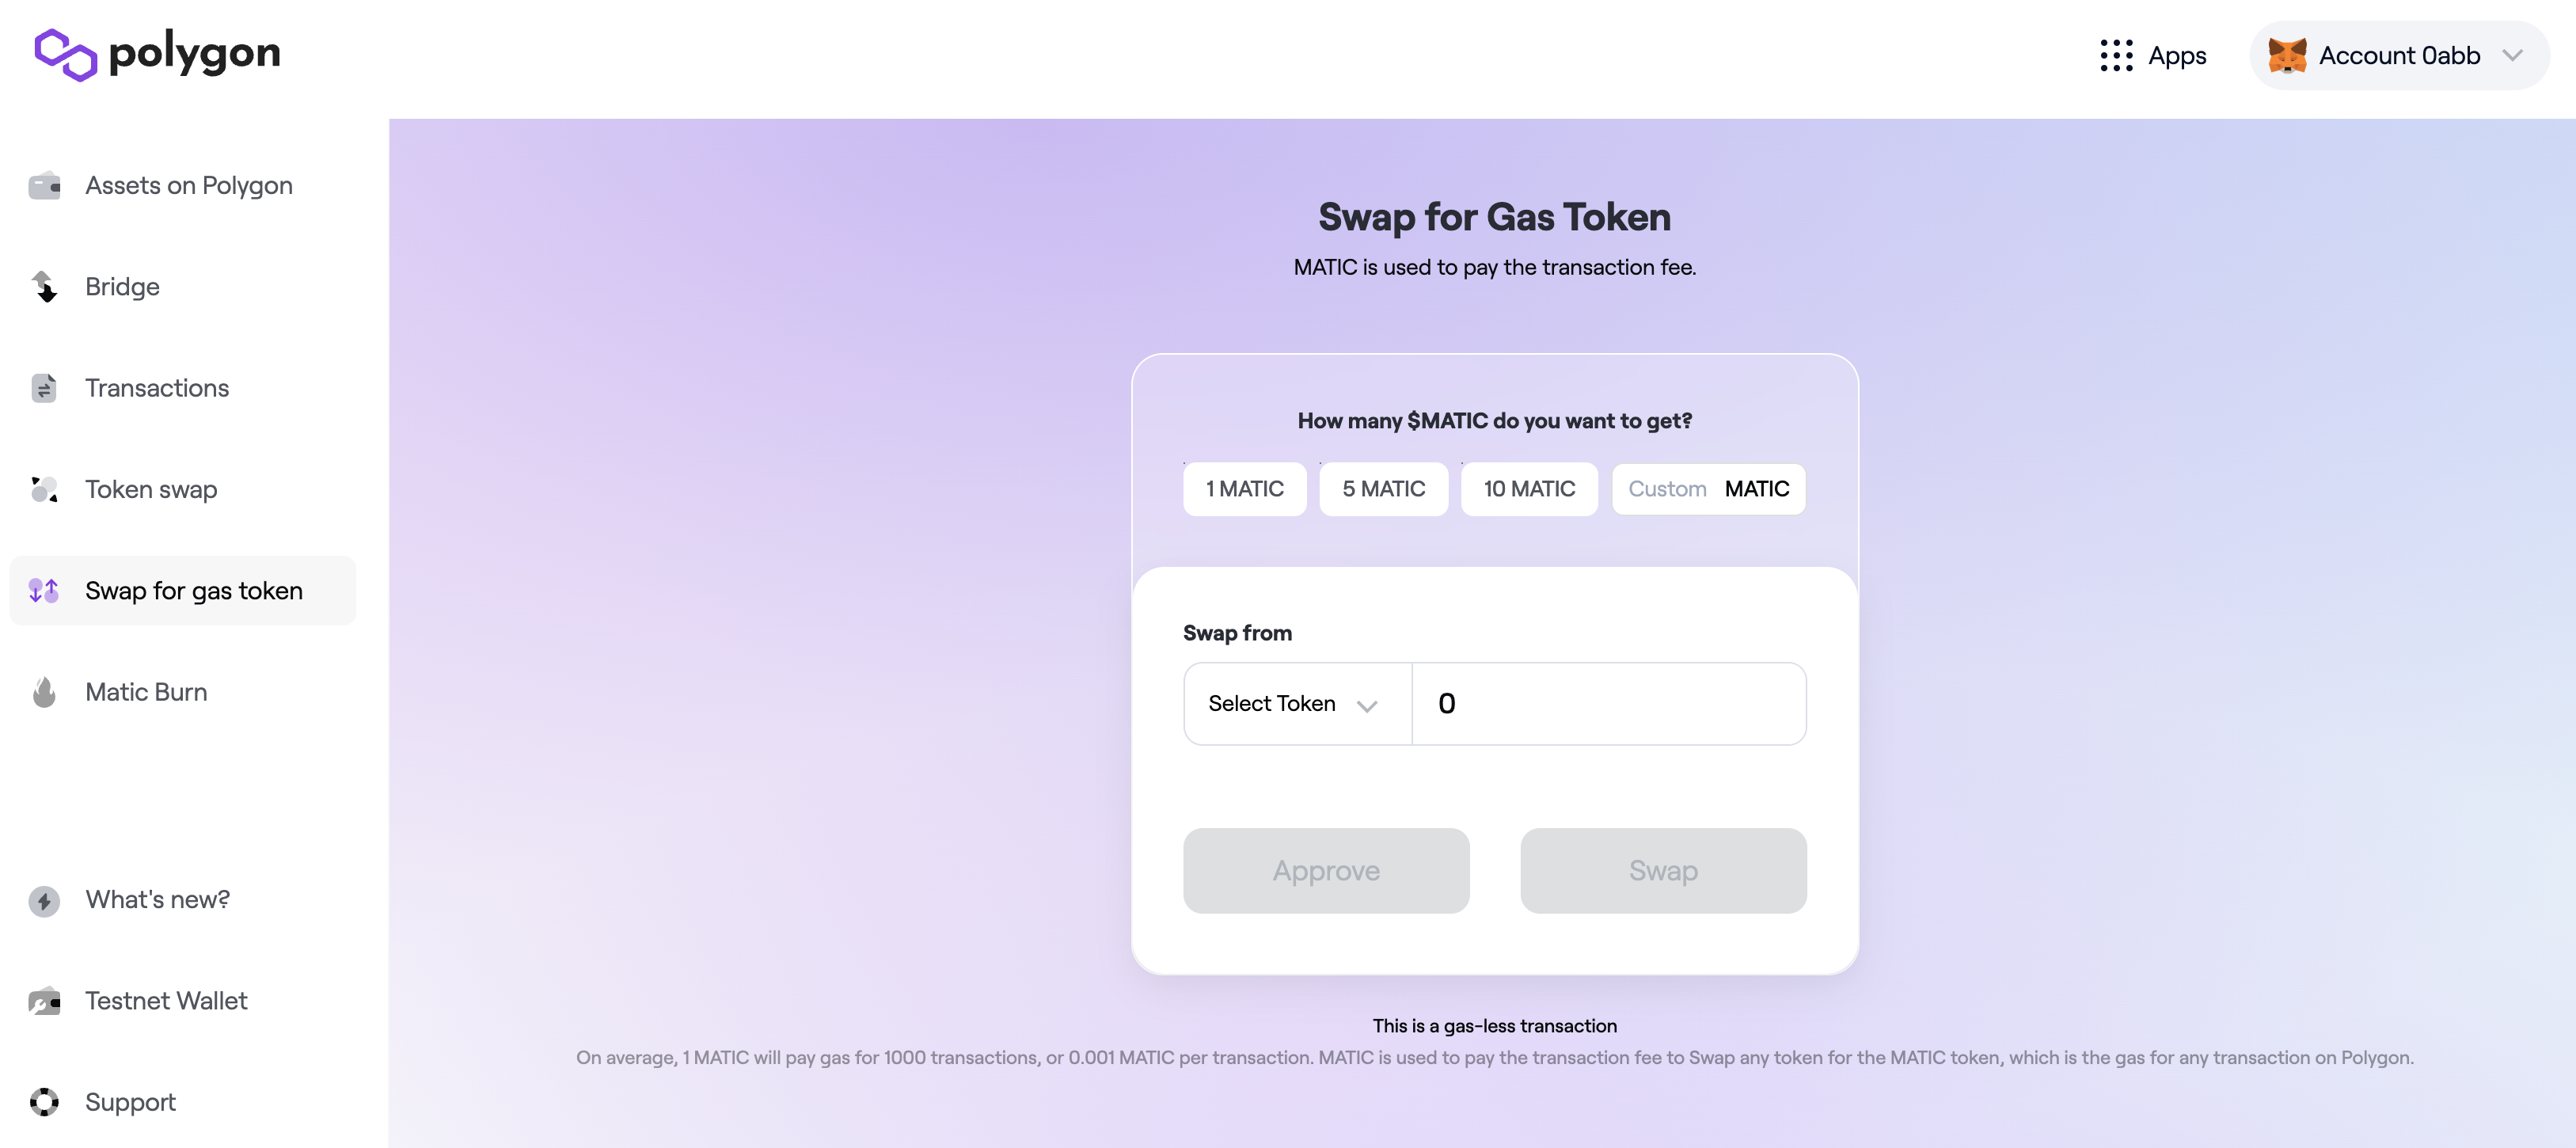 Swap for gas token (MATIC token)